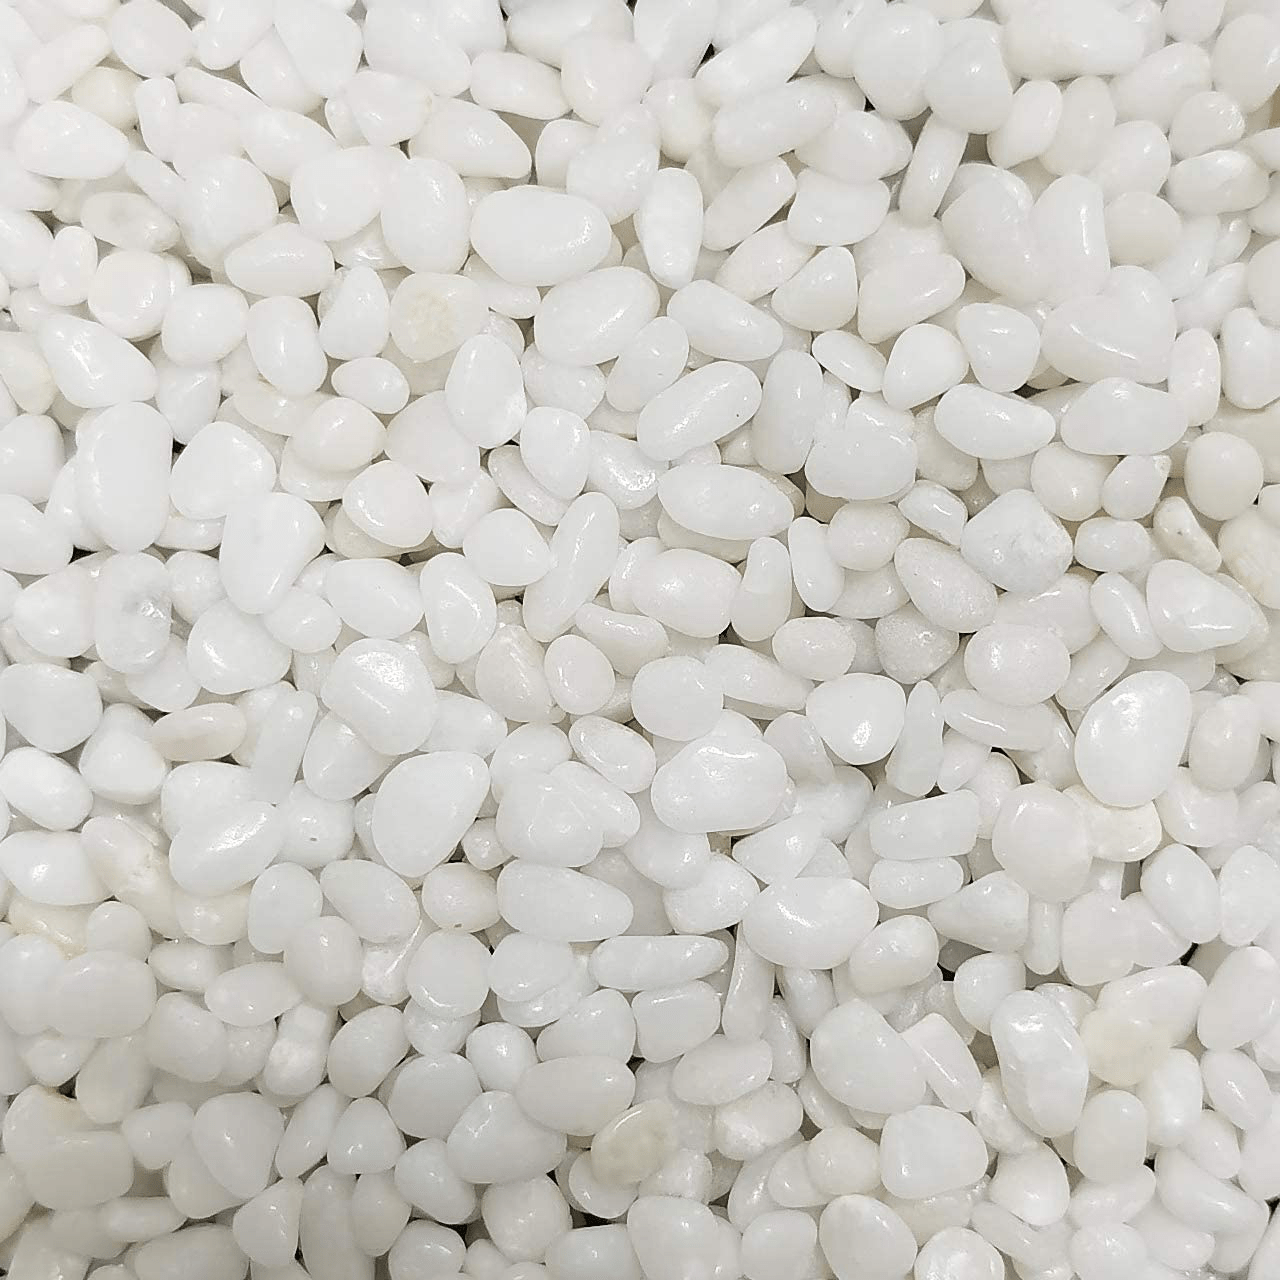 2.7 Lb Natural Polished Decorative White Pebbles - Small Stones 3/8" Gravel Size,River Rocks Pebbles for Plants, Home DIY Decor,Aquarium Gravel,Vase Fillers,Fairy Garden,Landscaping Outdoor Stones